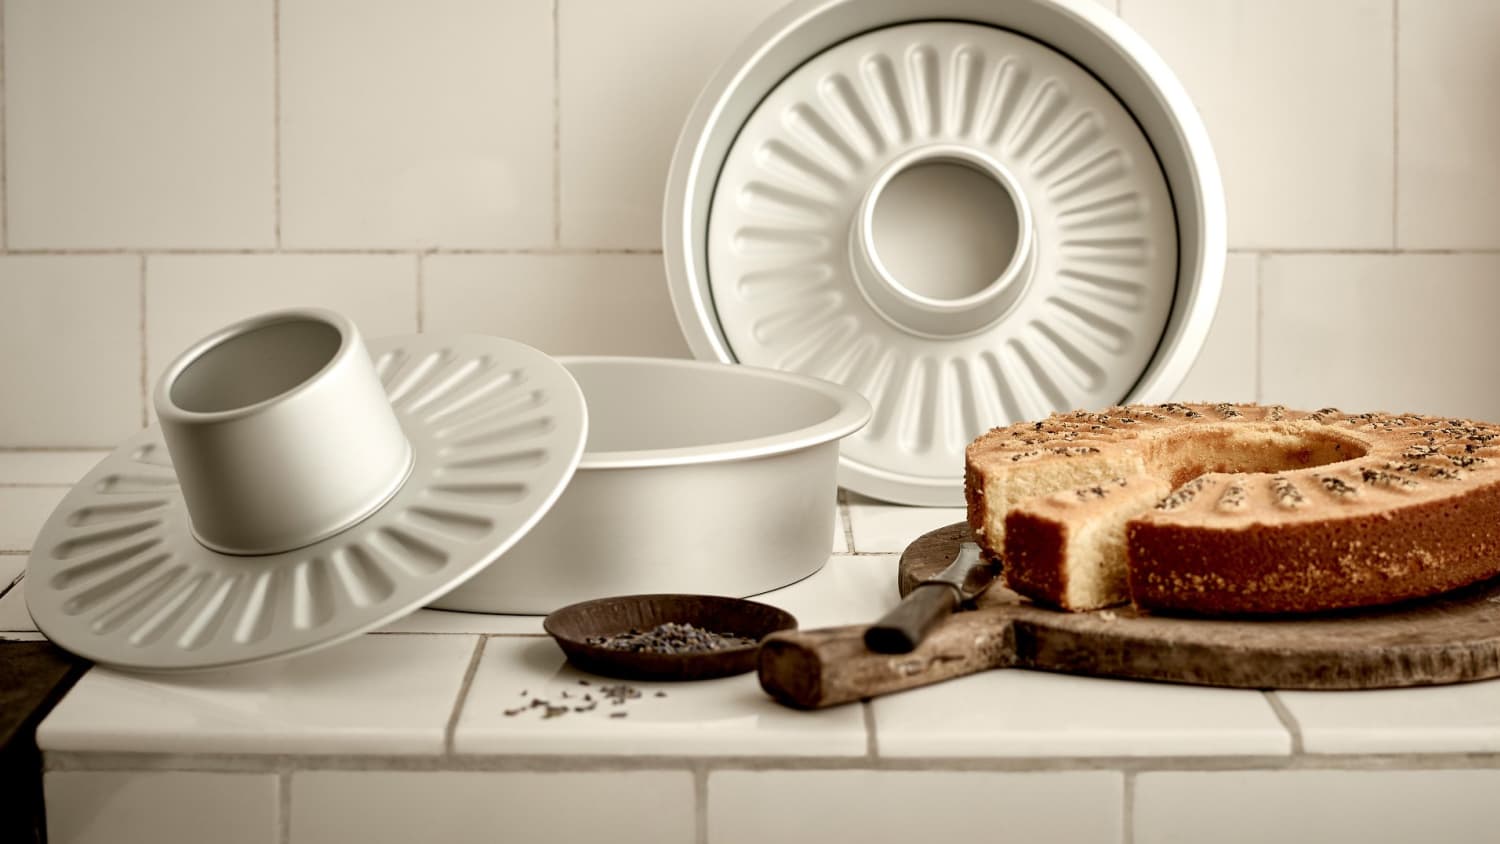 Review of IKEA's Vardagen Series Tube Cake Pan